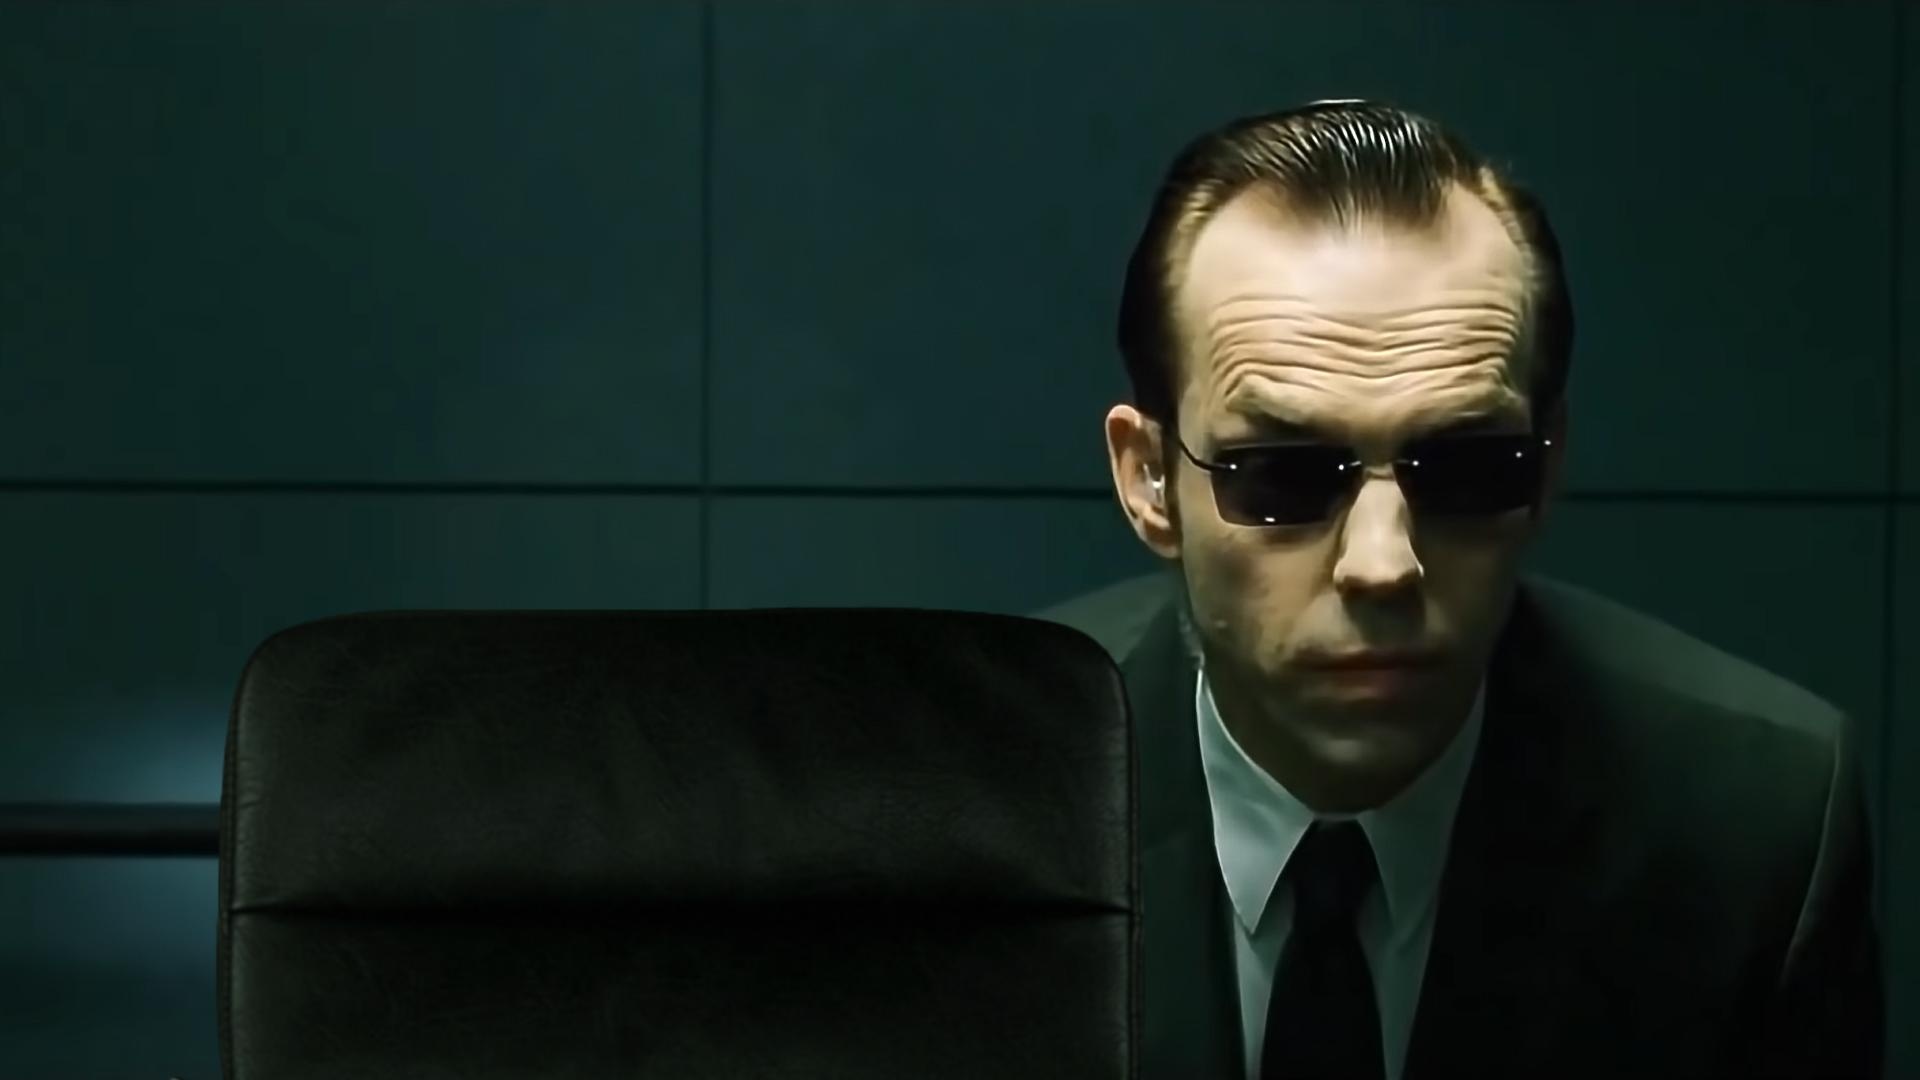 Agent Smith (The Matrix), Zoom background, Matrix-themed, Virtual meeting backdrop, 1920x1080 Full HD Desktop